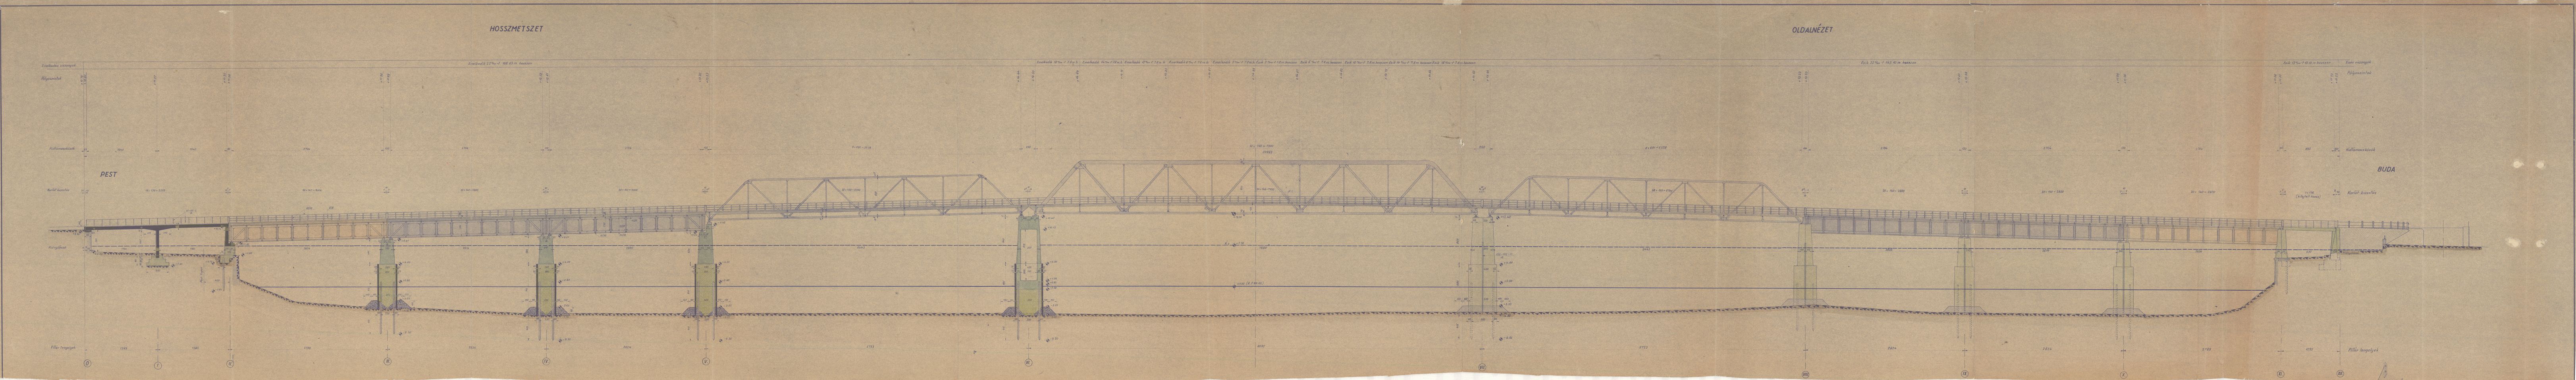 A Kossuth híd hosszmetszete, 1945. (BFL XV.22.52)